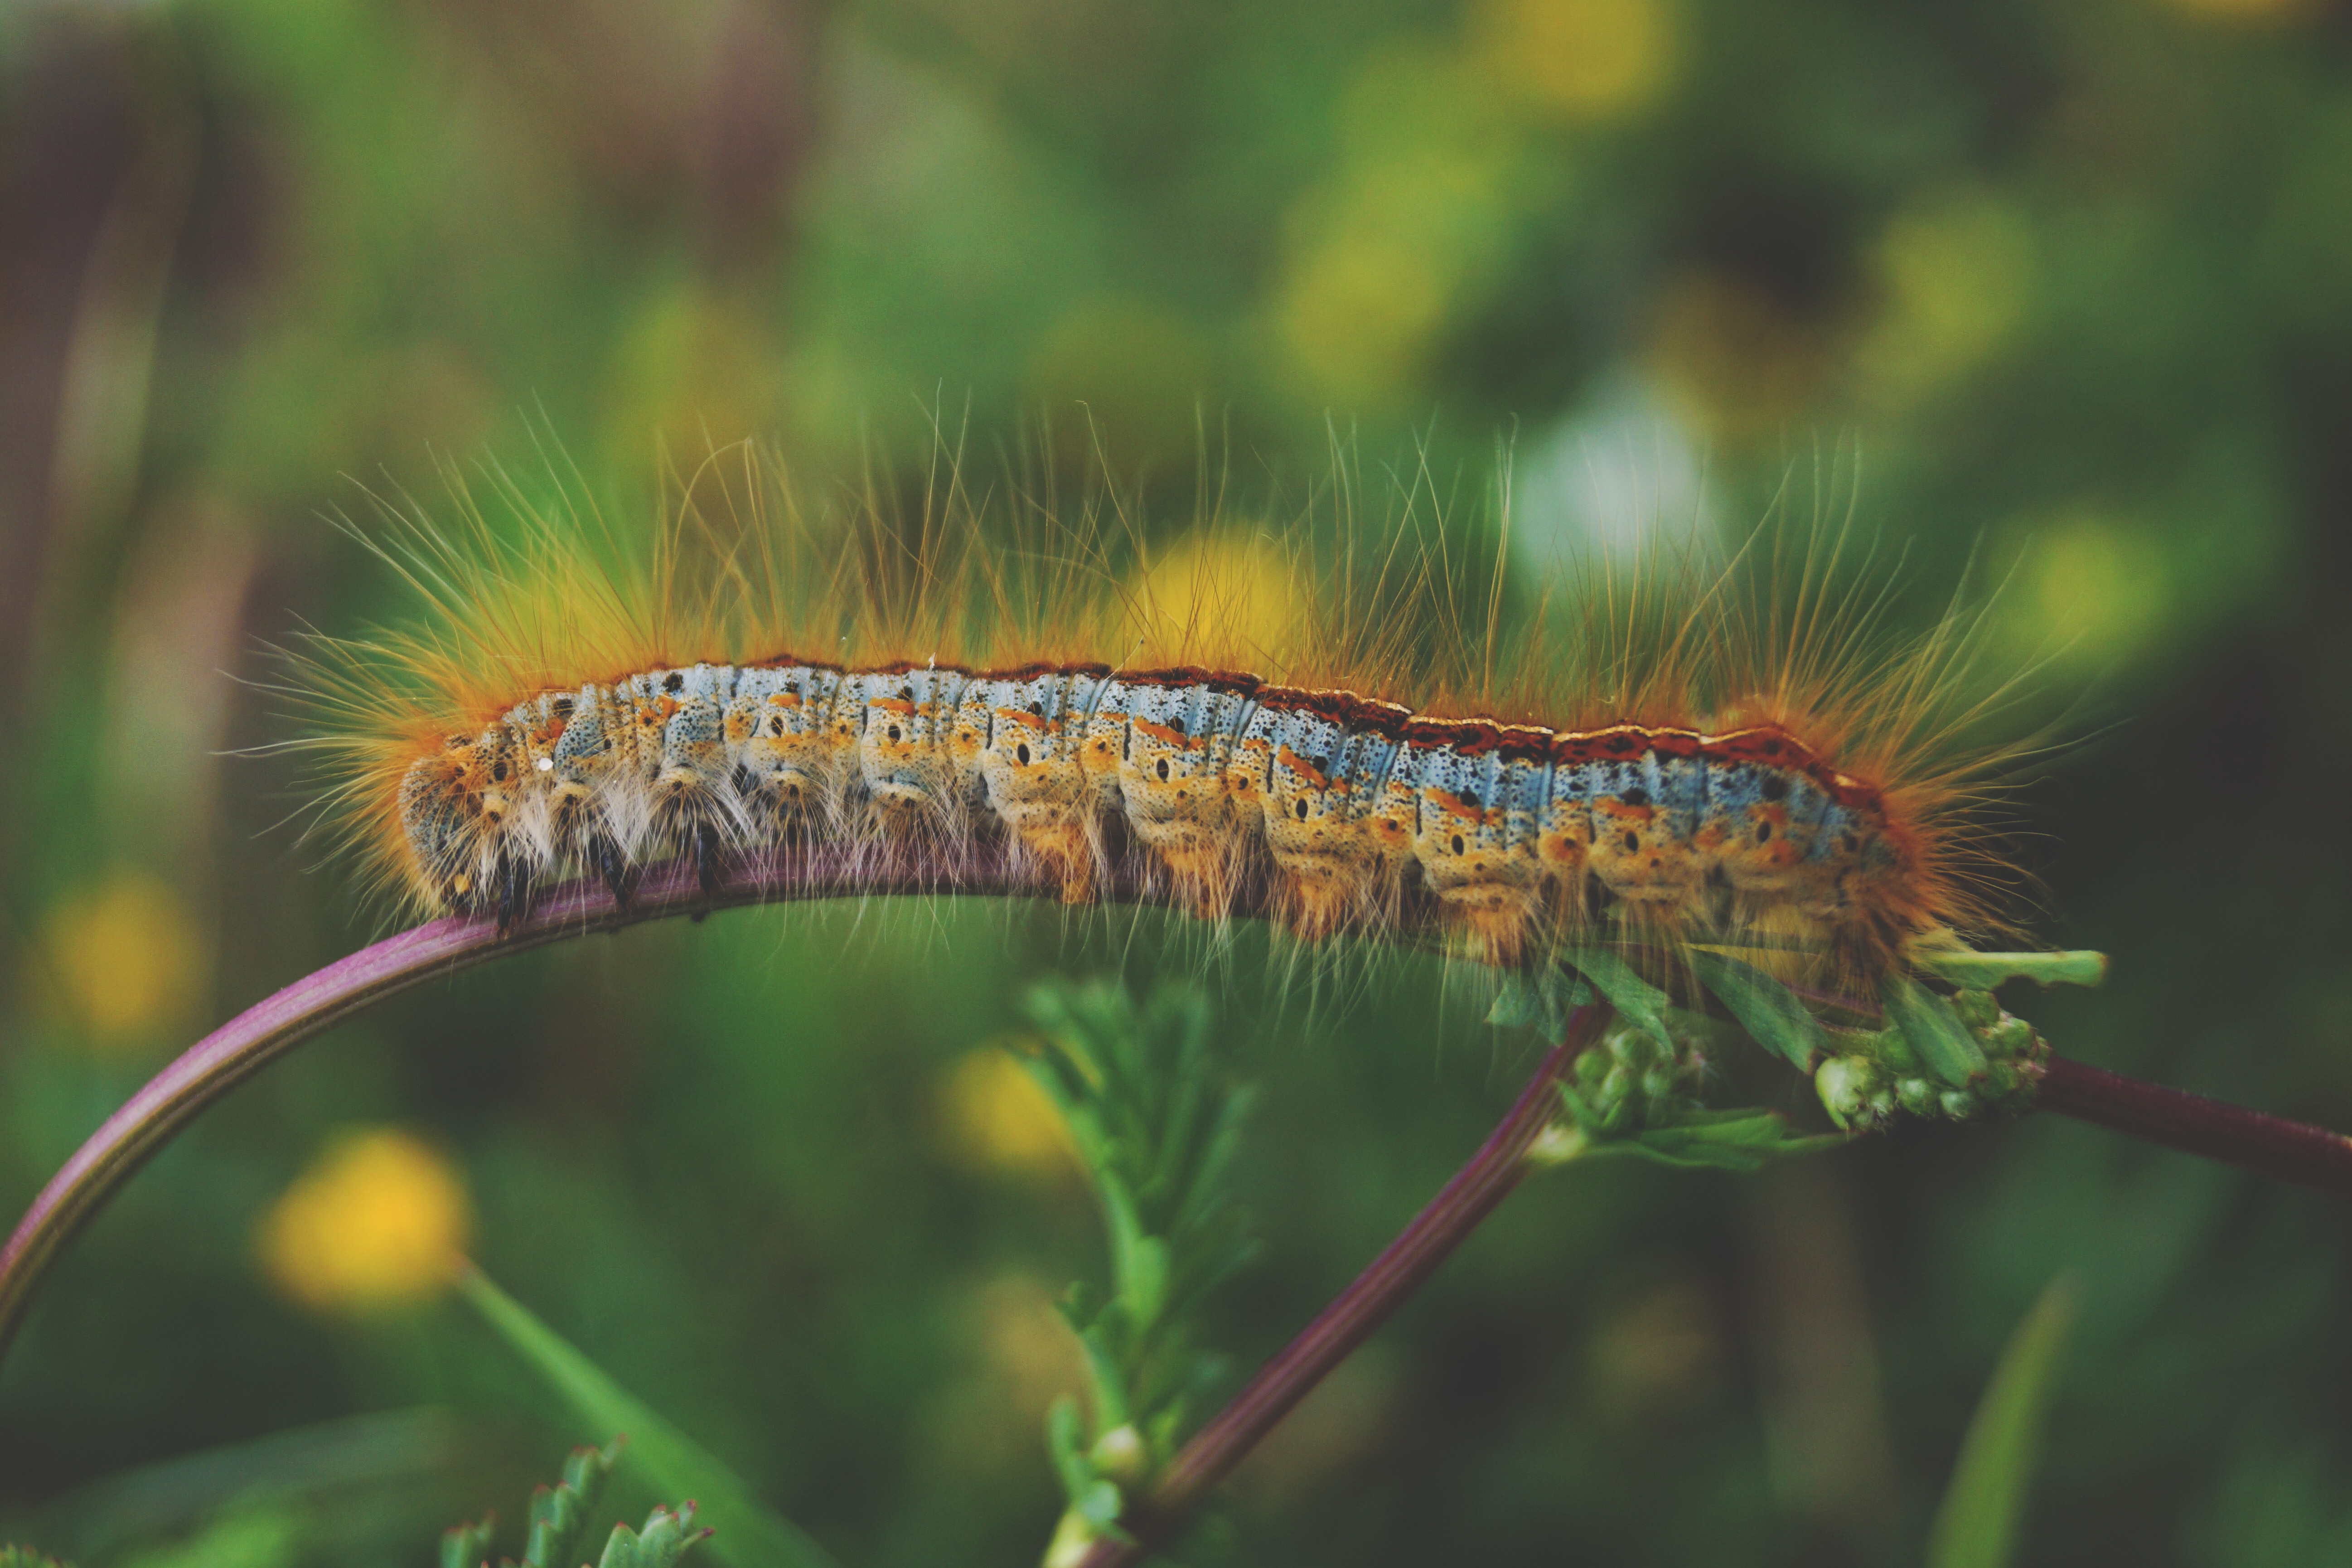 caterpillar on tree twig selective focus photography